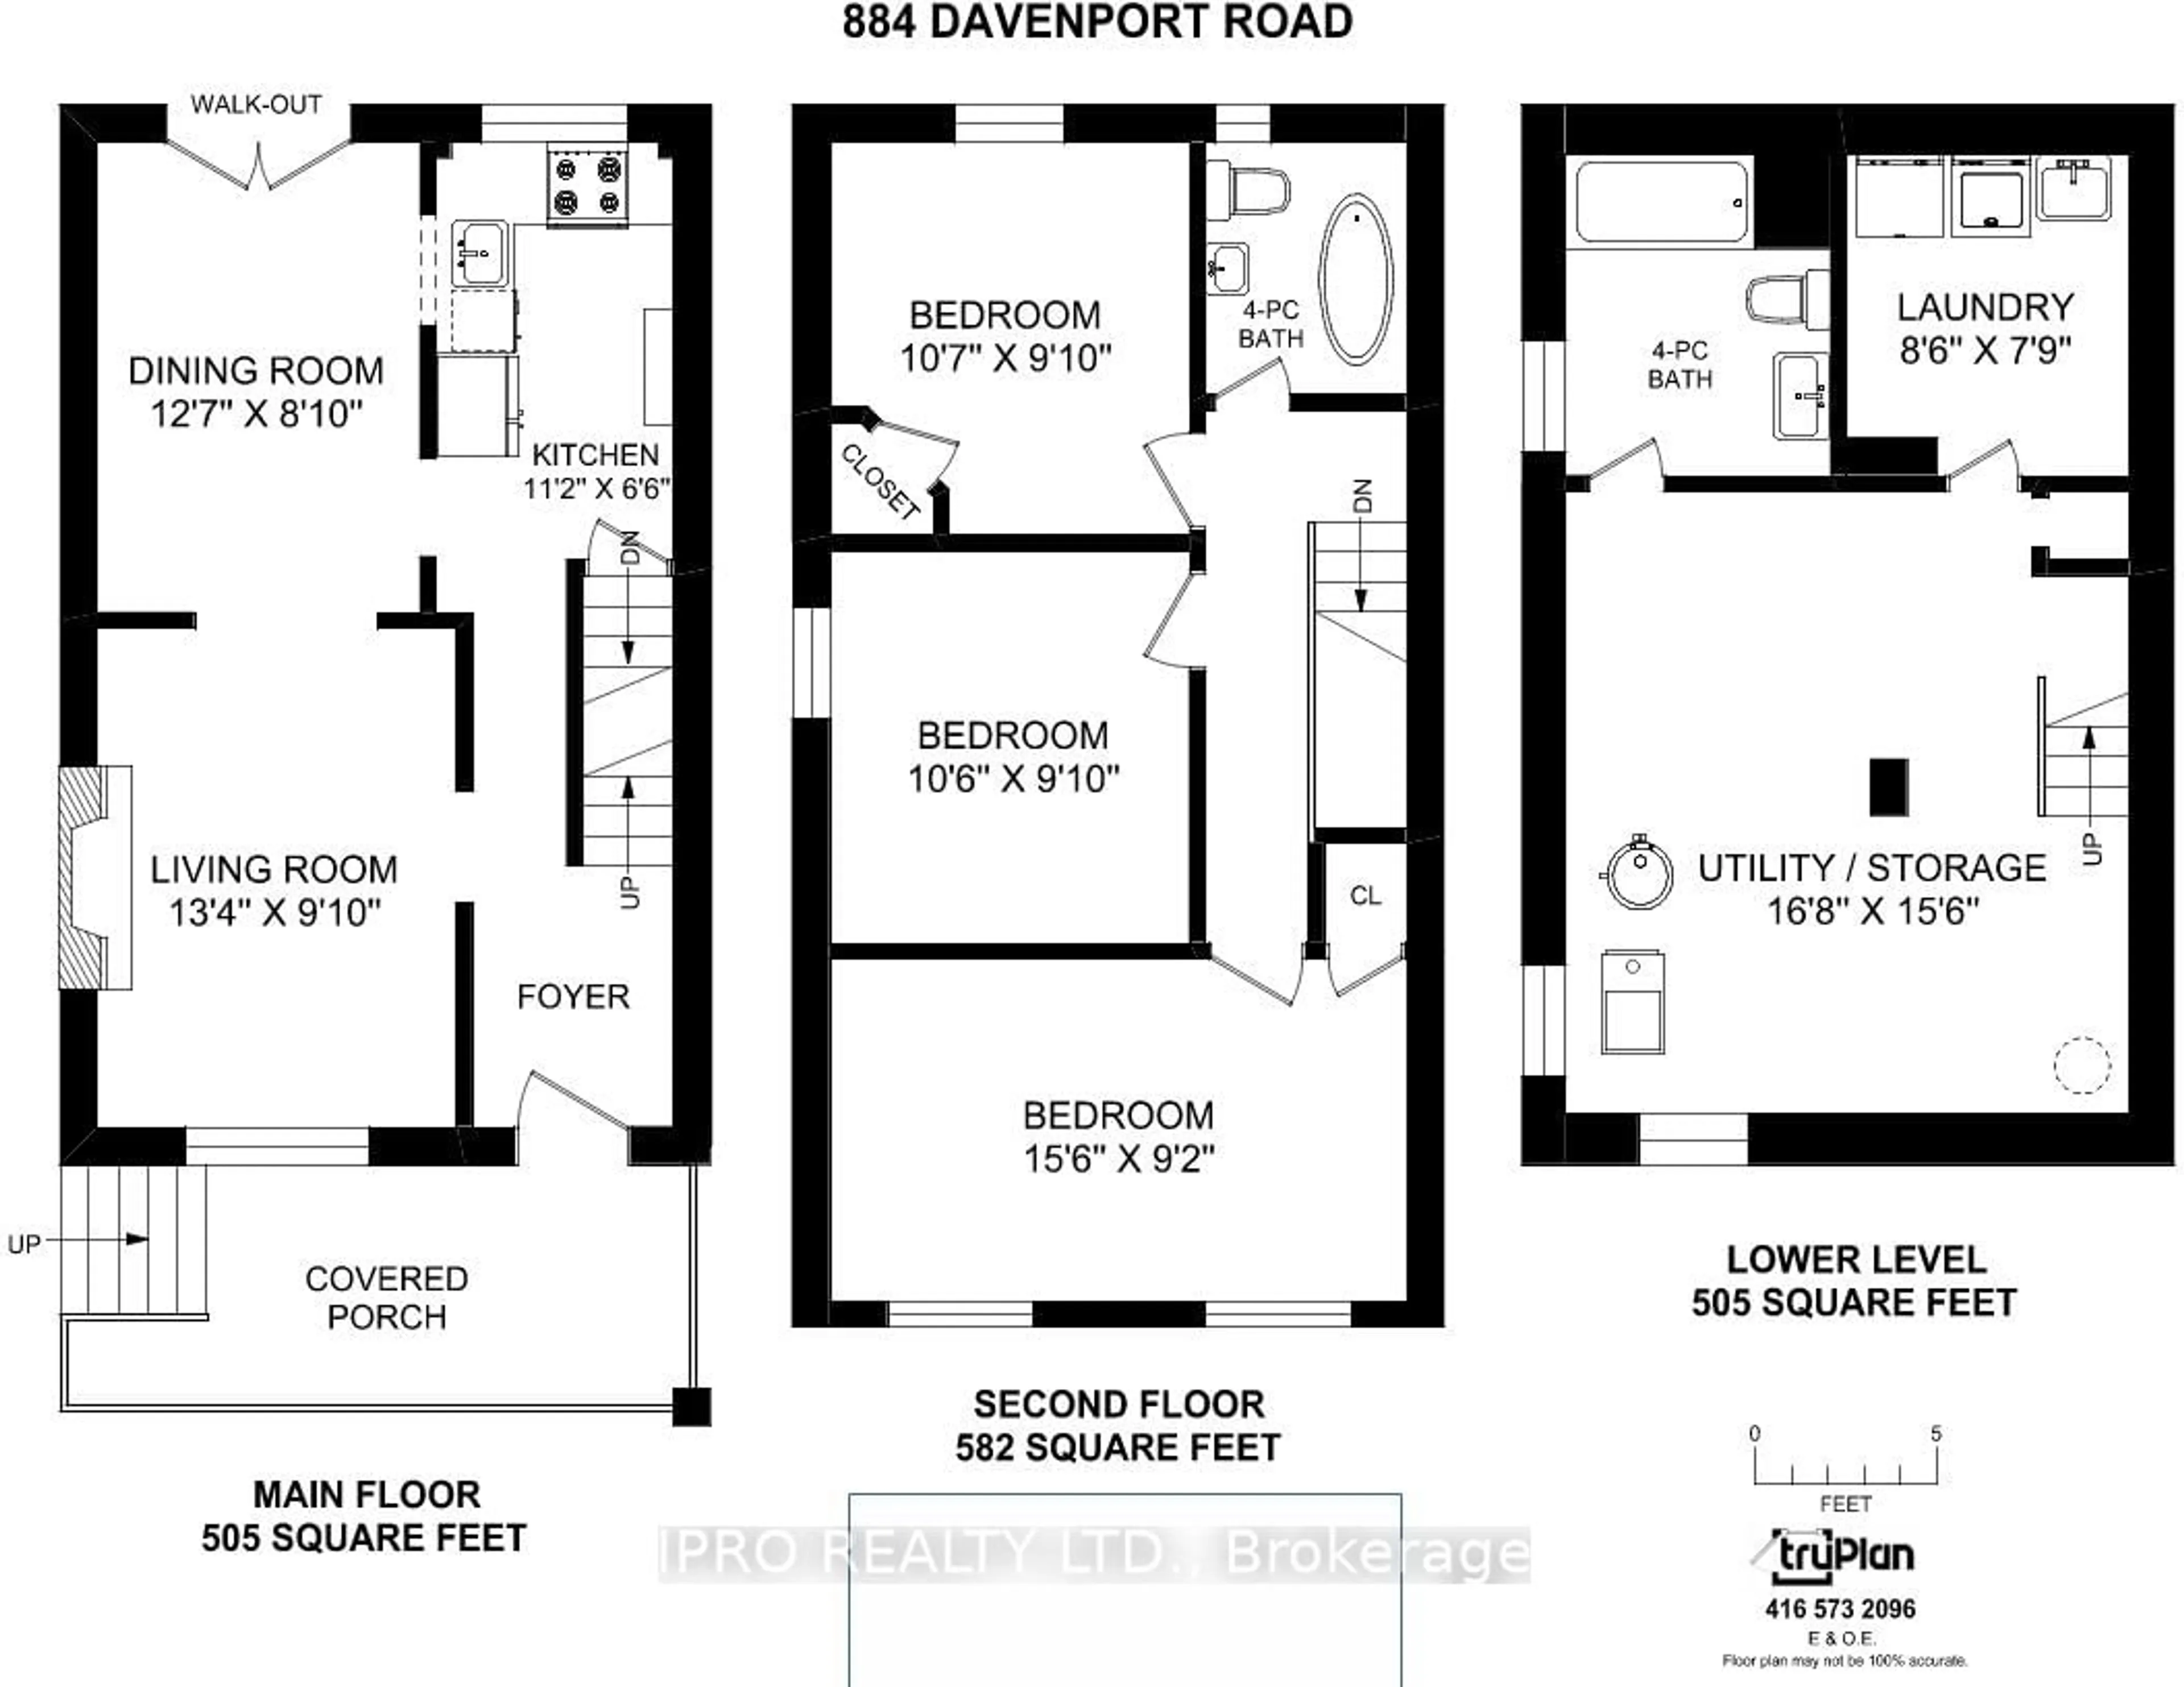 Floor plan for 884 Davenport Rd, Toronto Ontario M6G 2B6